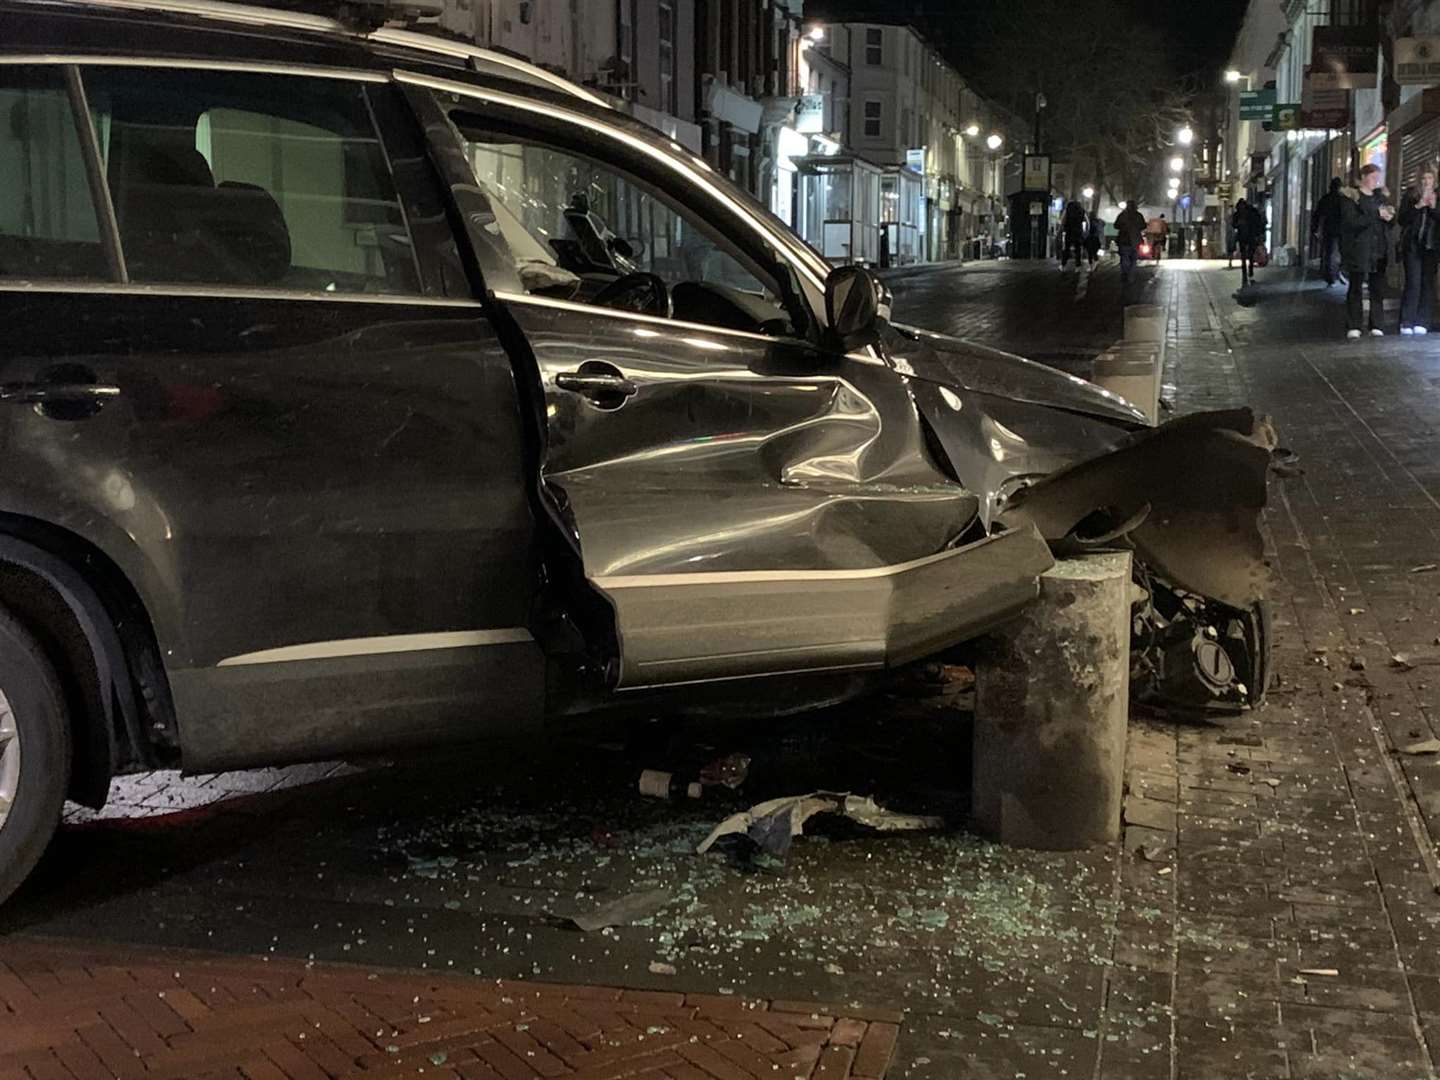 A car smashed into bollards in Bank Street, Ashford. Photo: Cheryl Whybrow